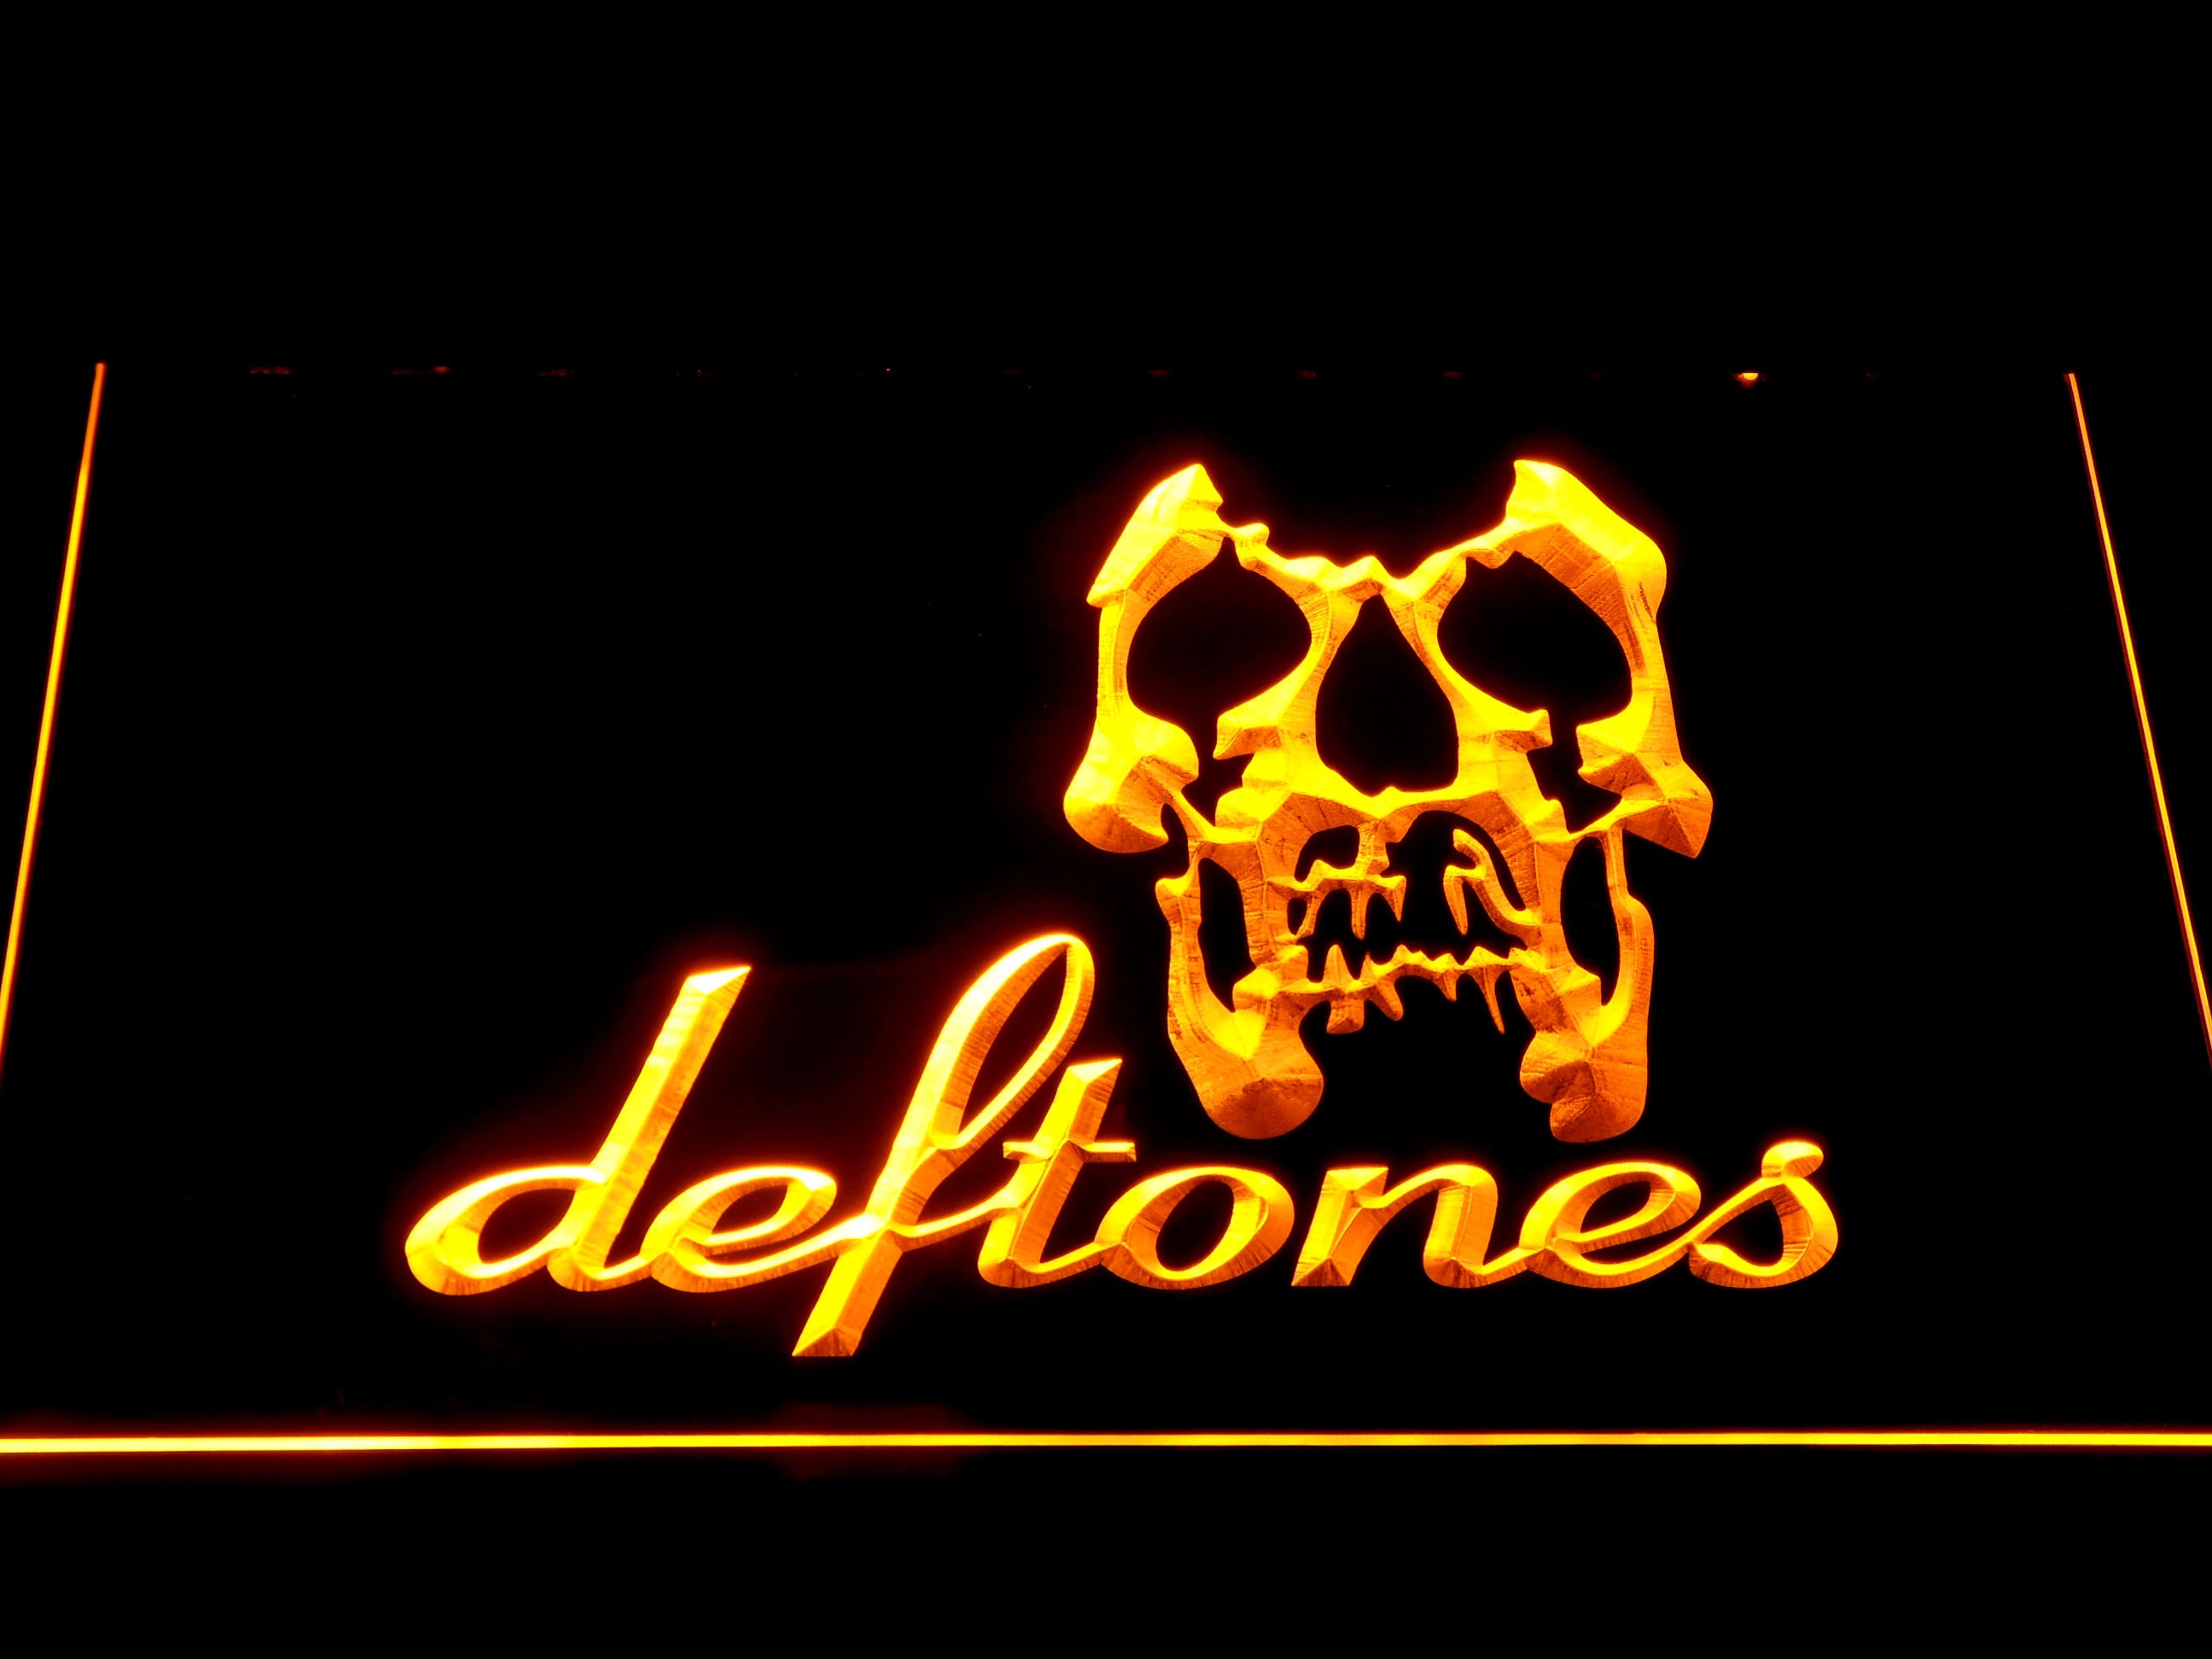 Deftones Skull Metal Band LED Neon Sign